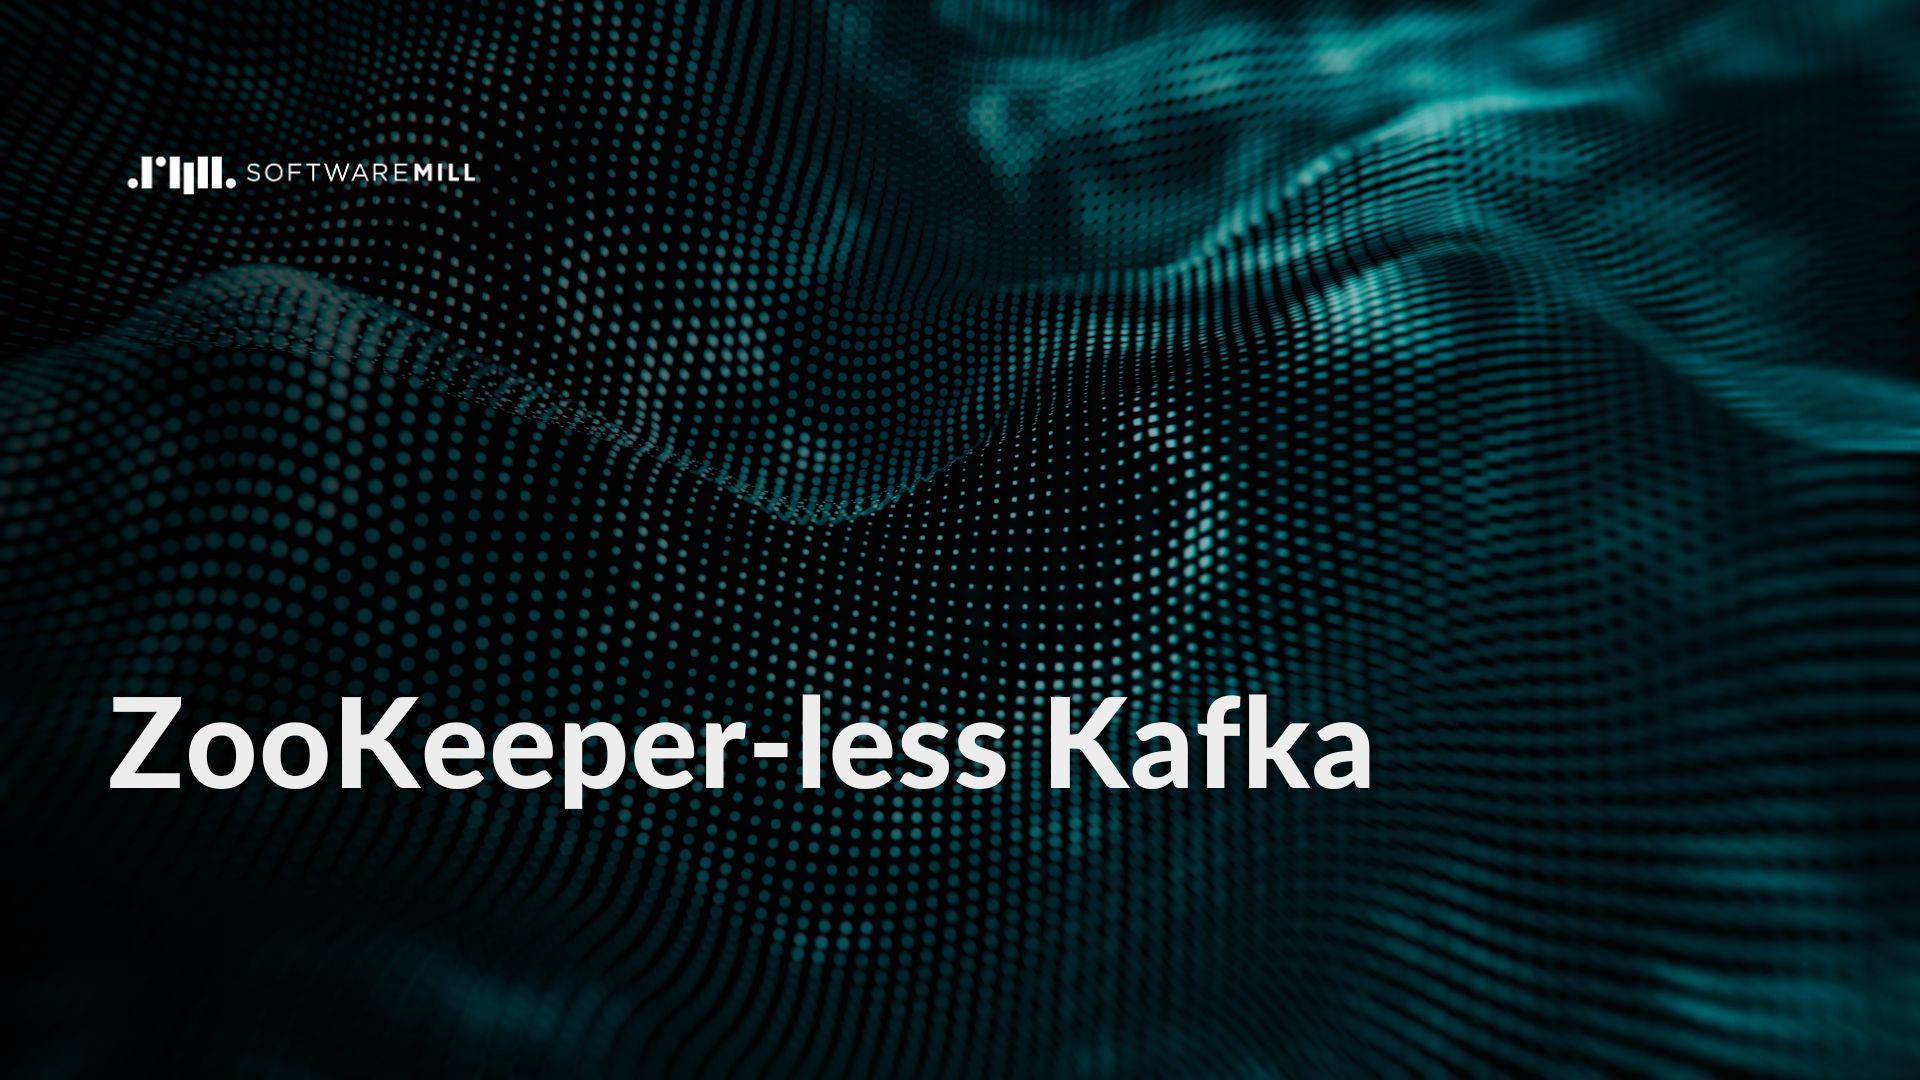 ZooKeeper-less Kafka webp image